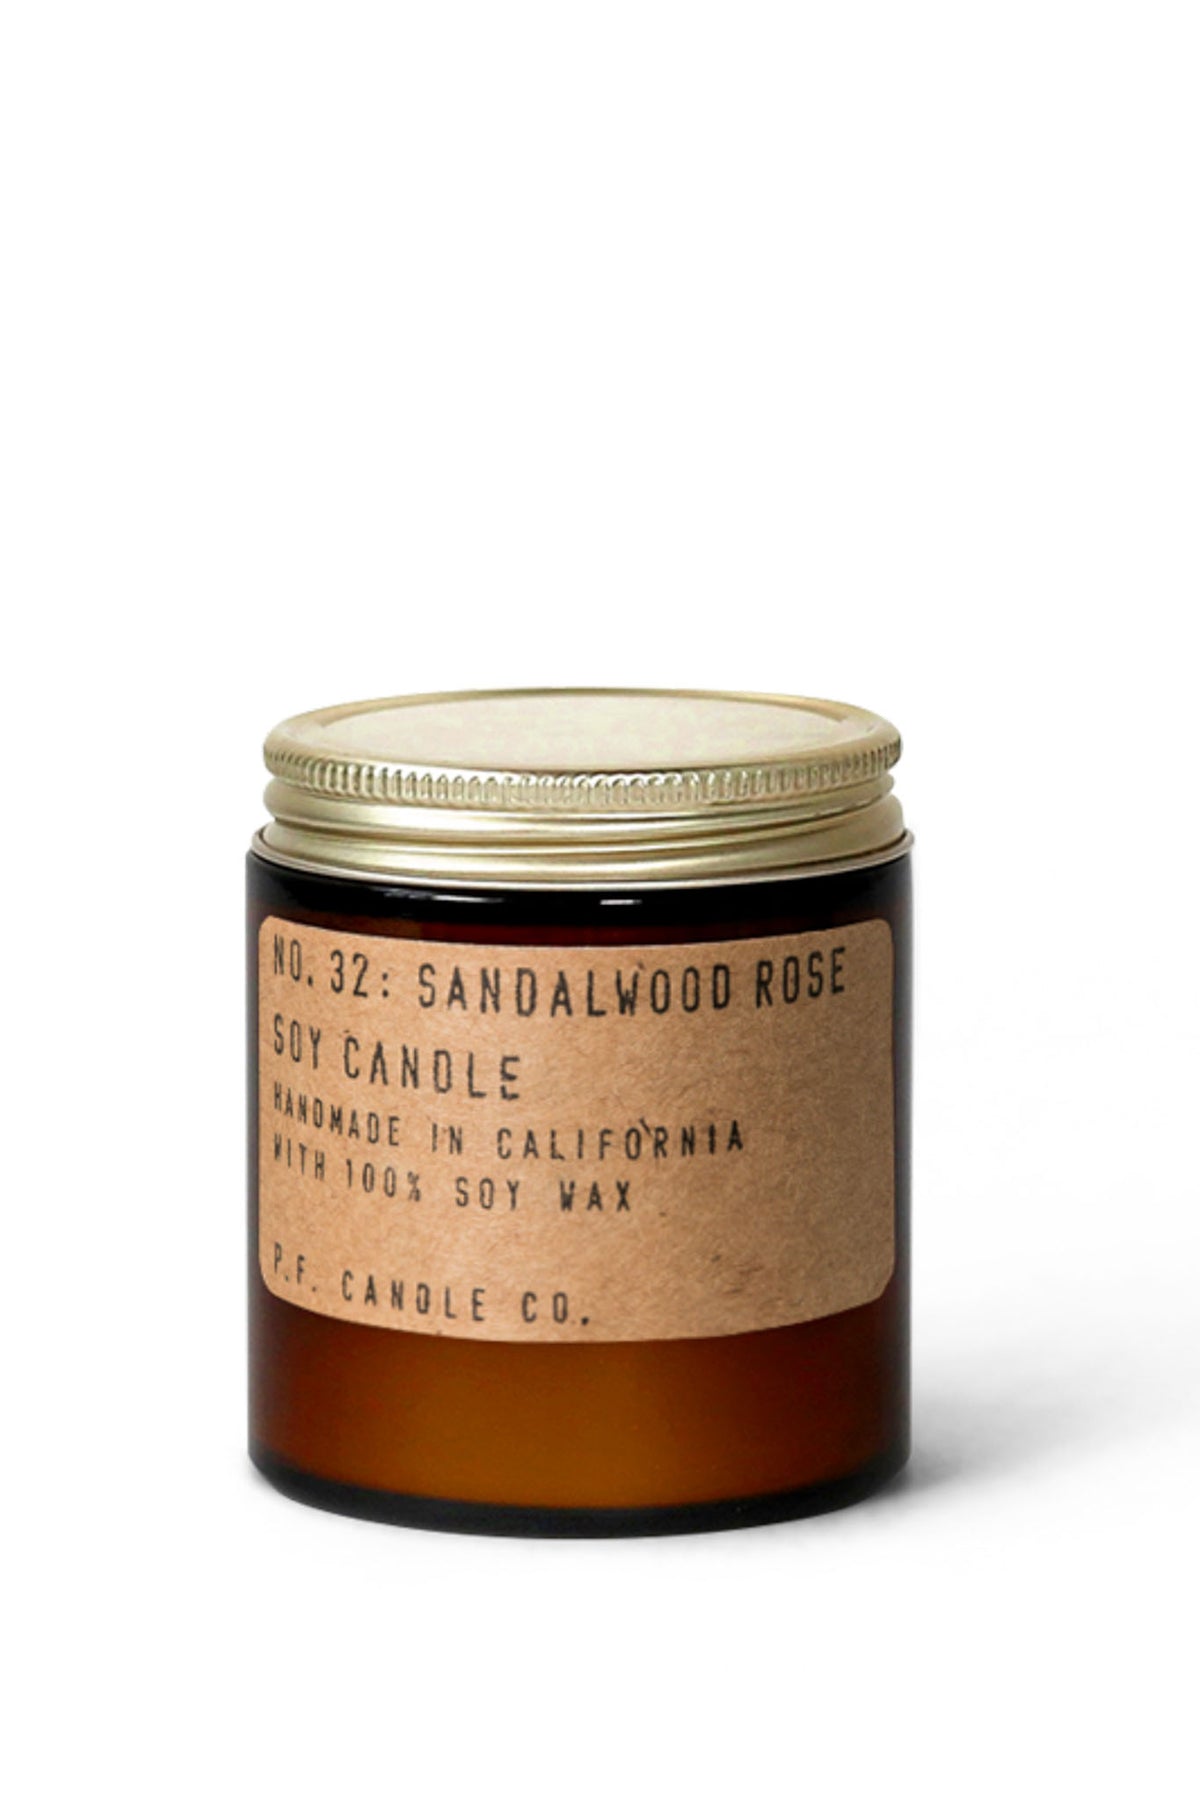 P.F. Candle Co. Sandalwood Rose 3.5 oz Mini Travel Candle